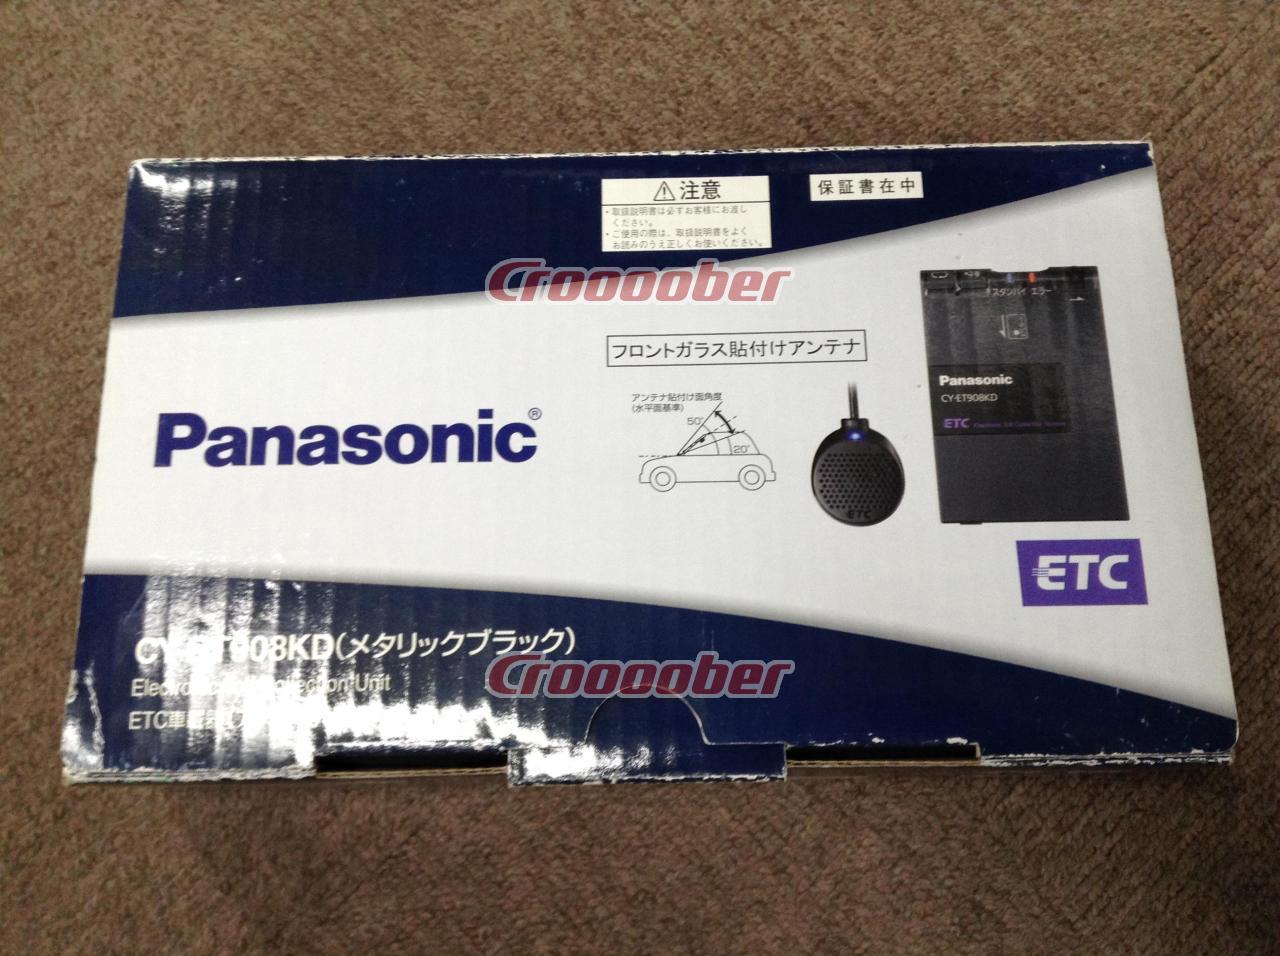 Panasonic CY-ET908KD | ETC Separate | Croooober